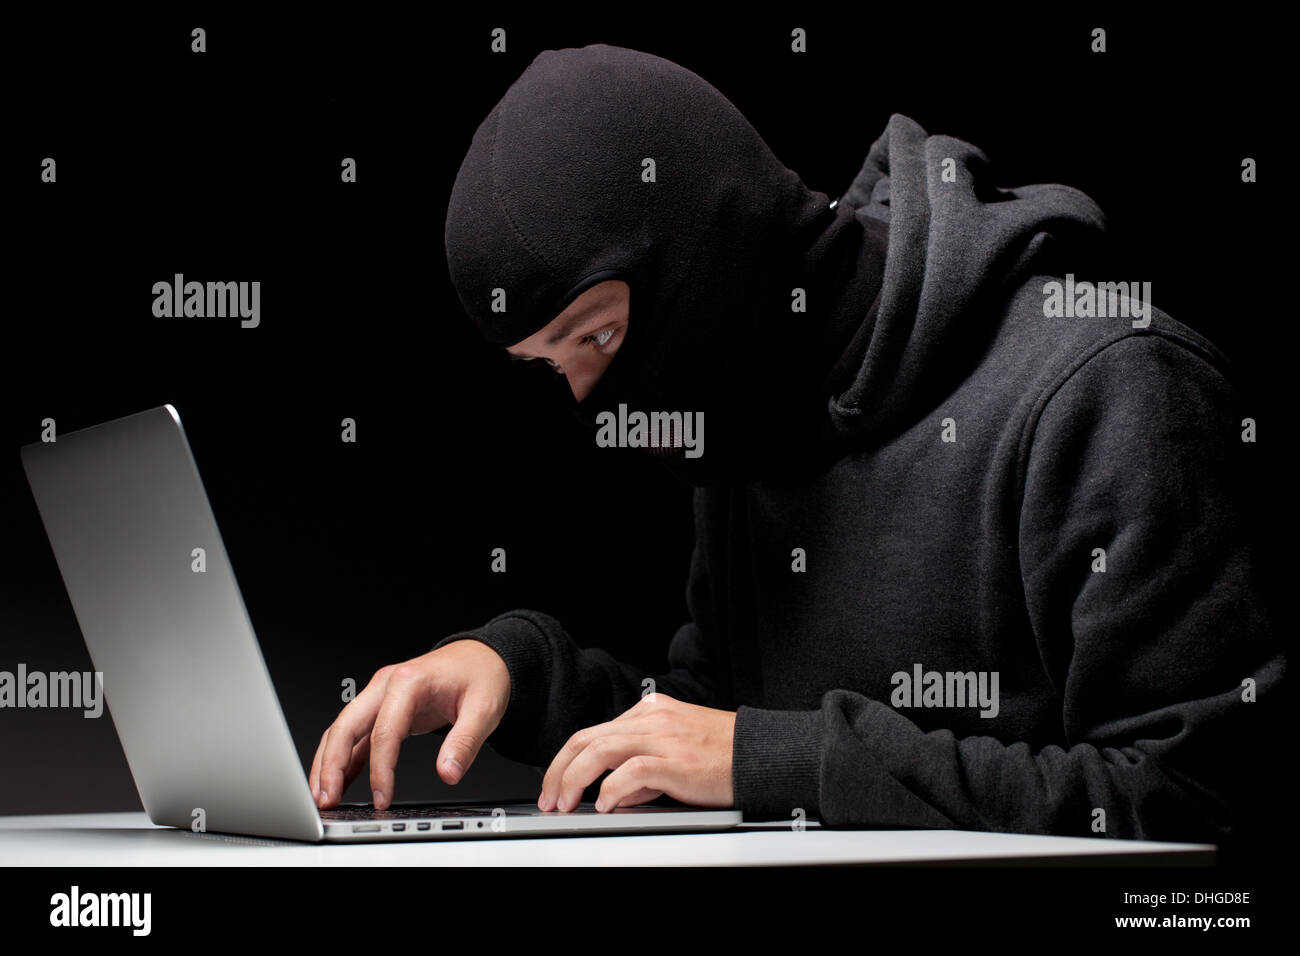 Computer hacker in a balaclava Stock Photo